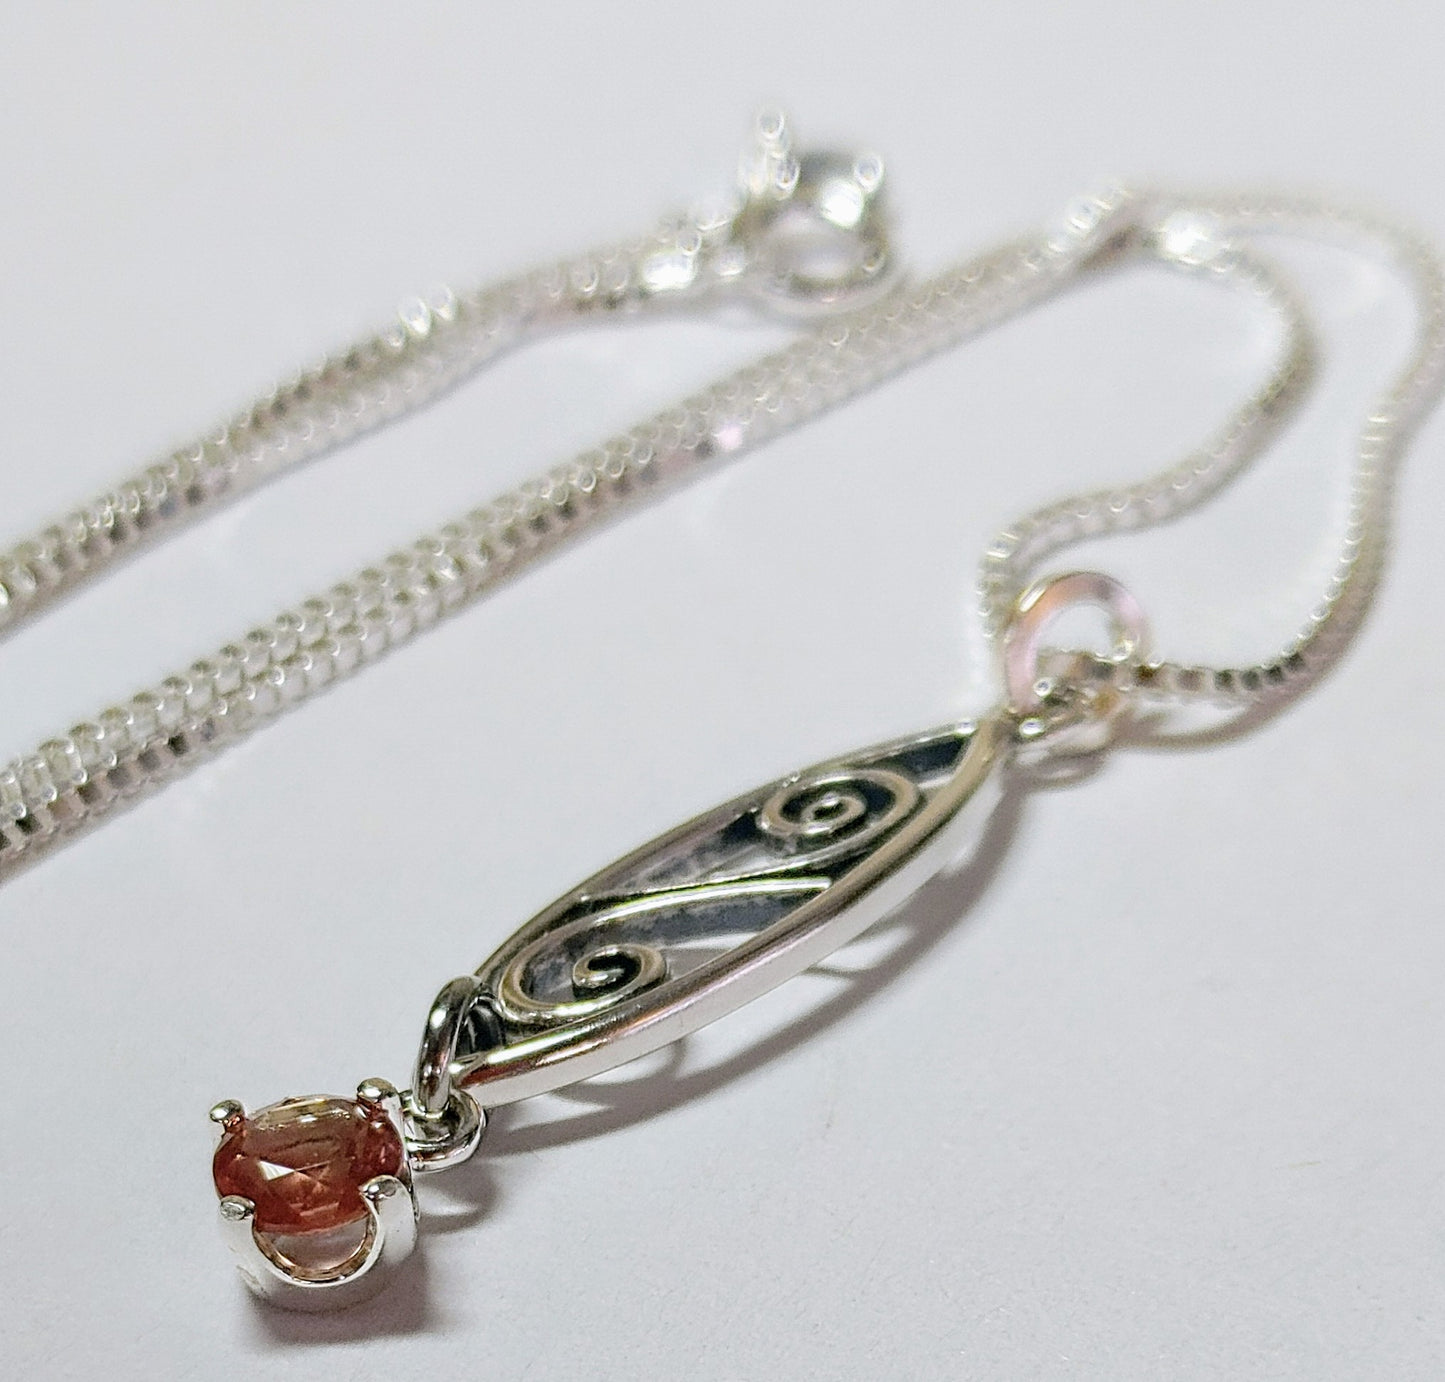 Peach Oregon Sunstone "Scroll Design" Necklace with Chain